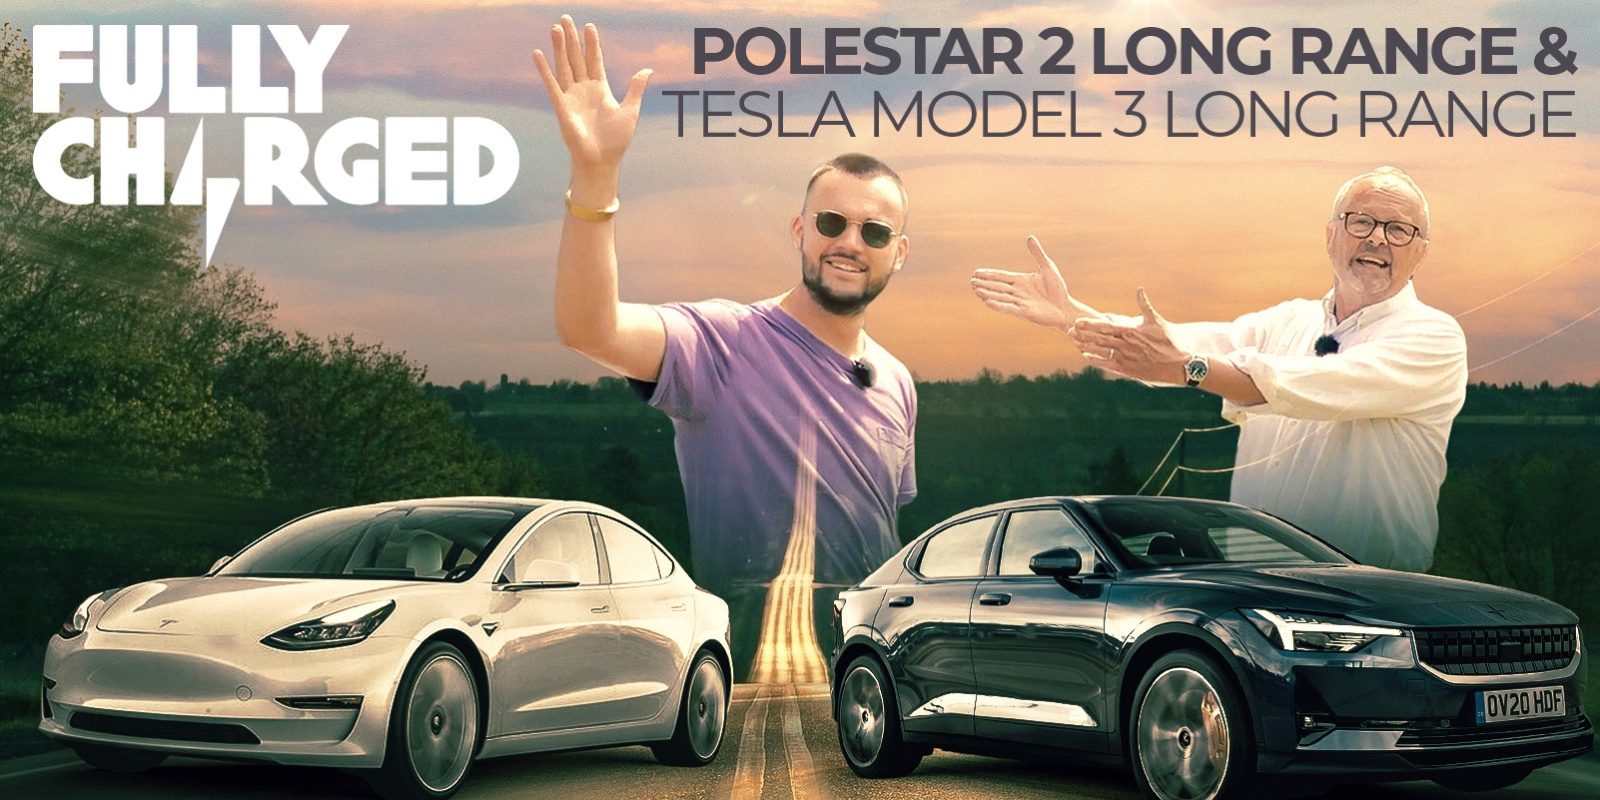 Tesla Polestar